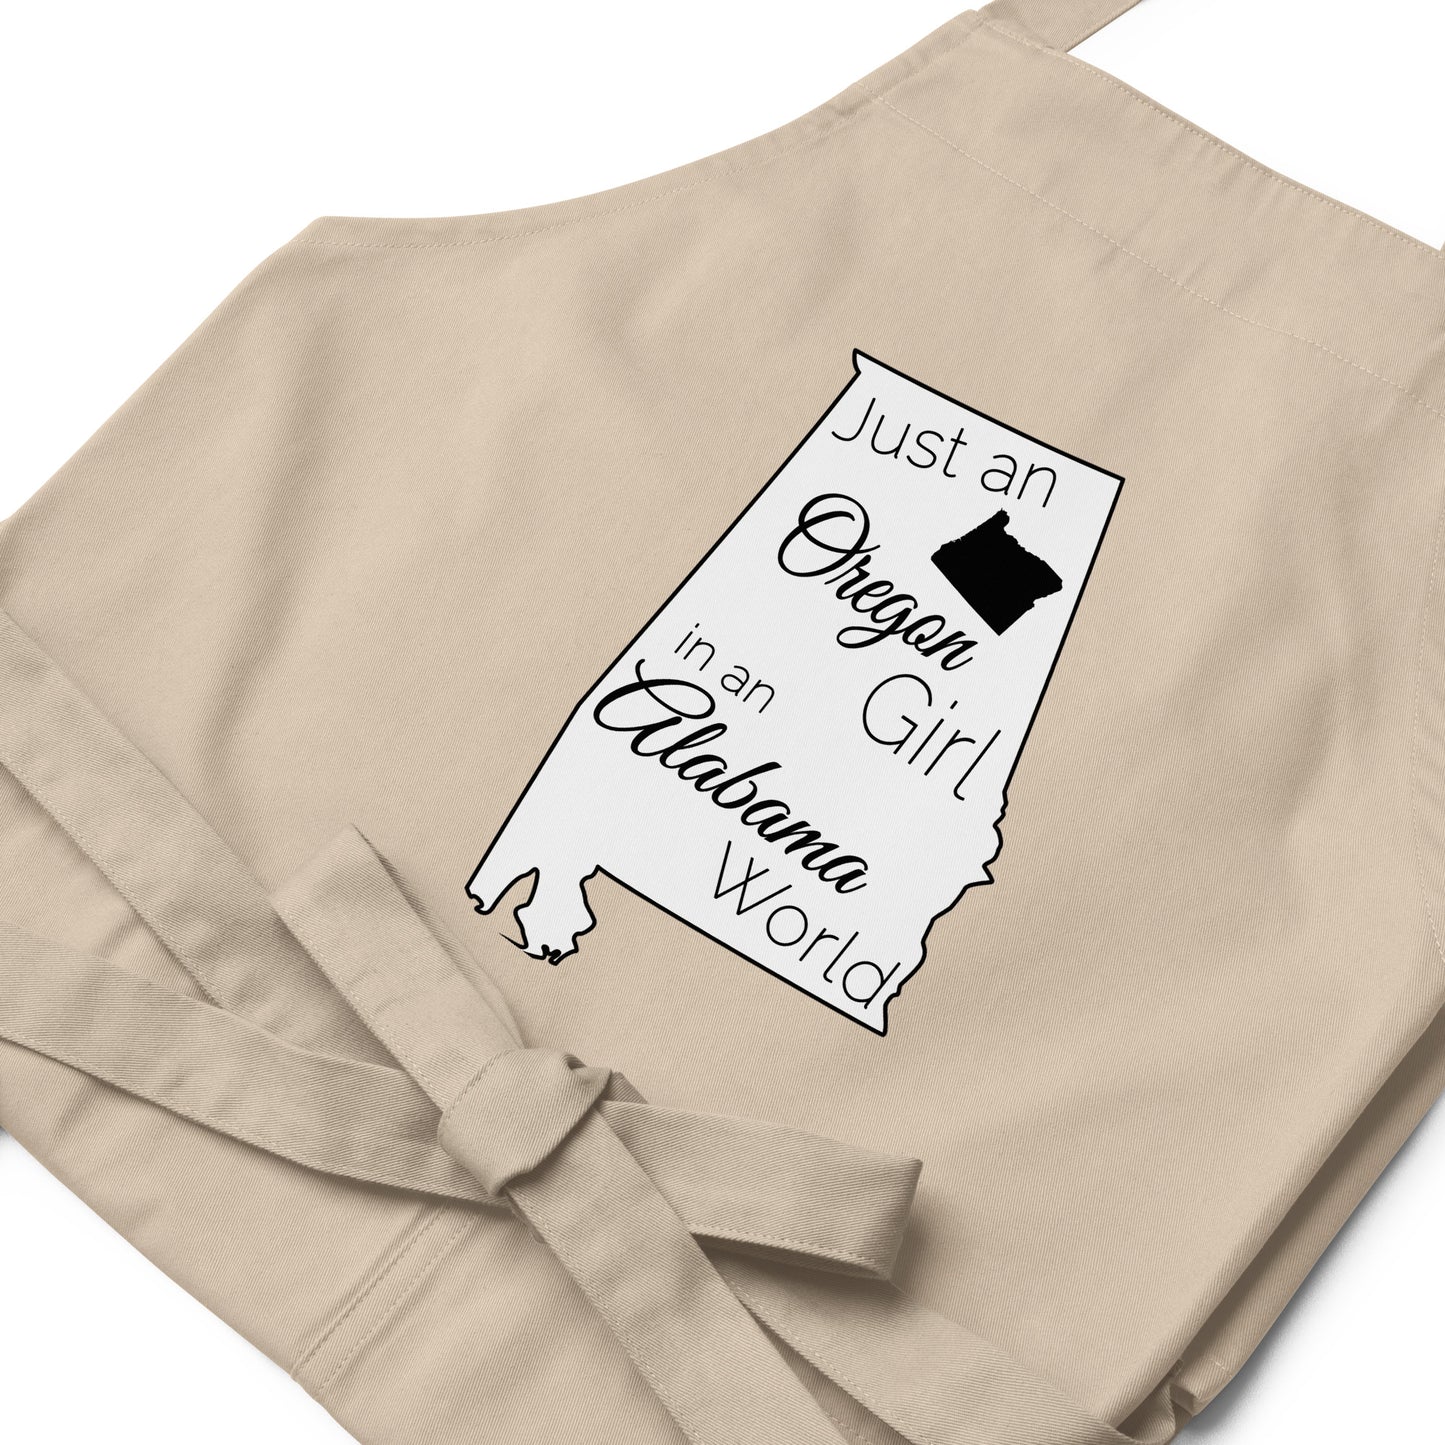 Just an Oregon Girl in an Alabama World Organic cotton apron